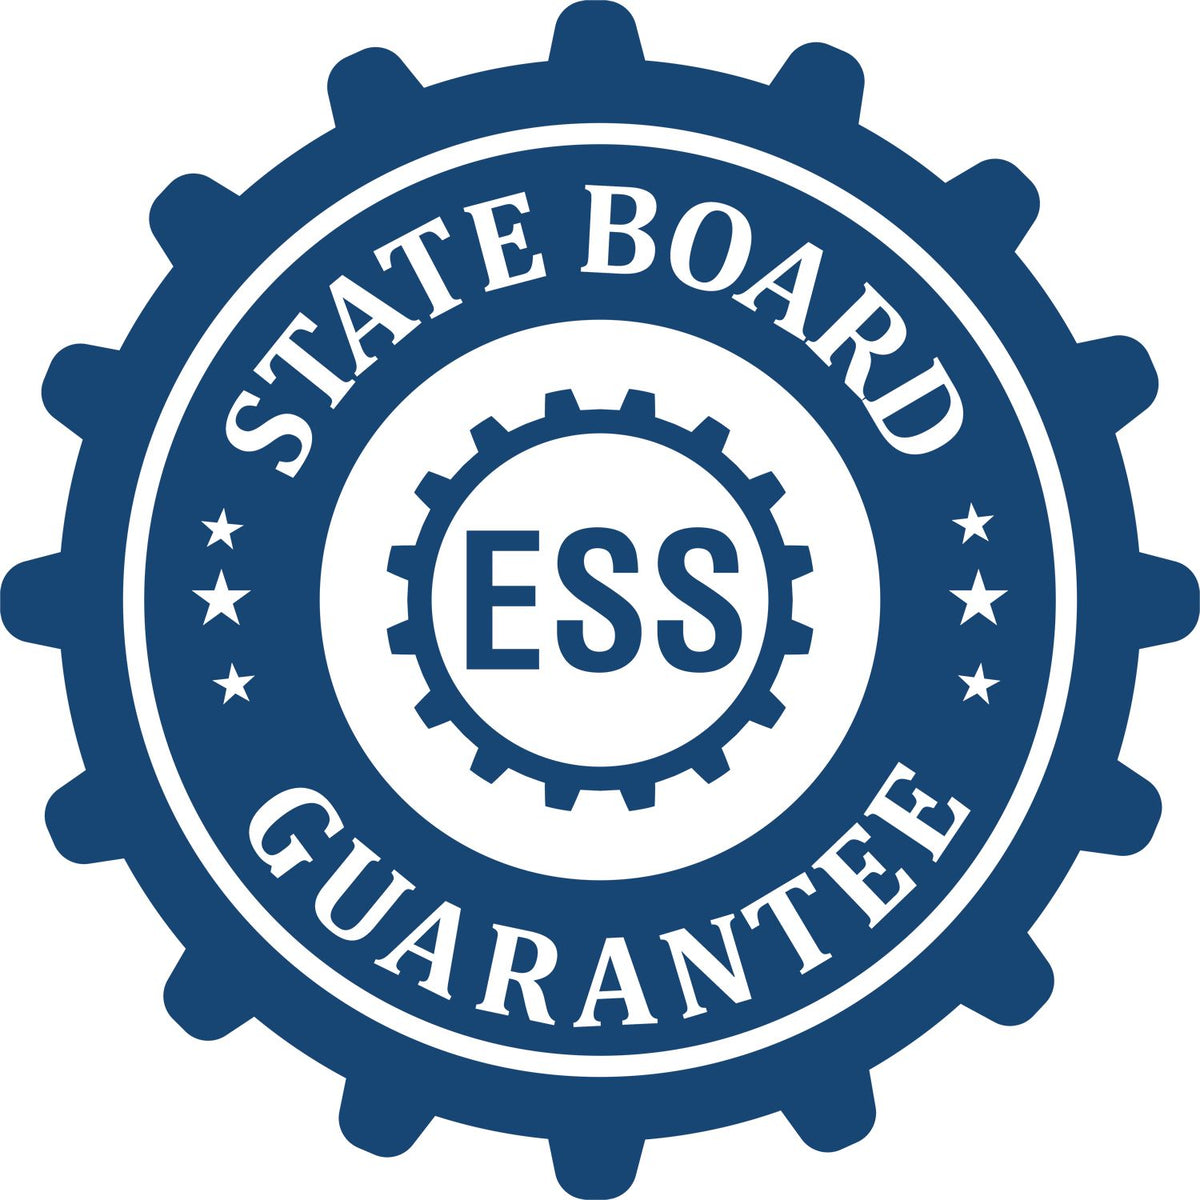 An emblem in a gear shape illustrating a state board guarantee for the Hybrid Alaska Land Surveyor Seal